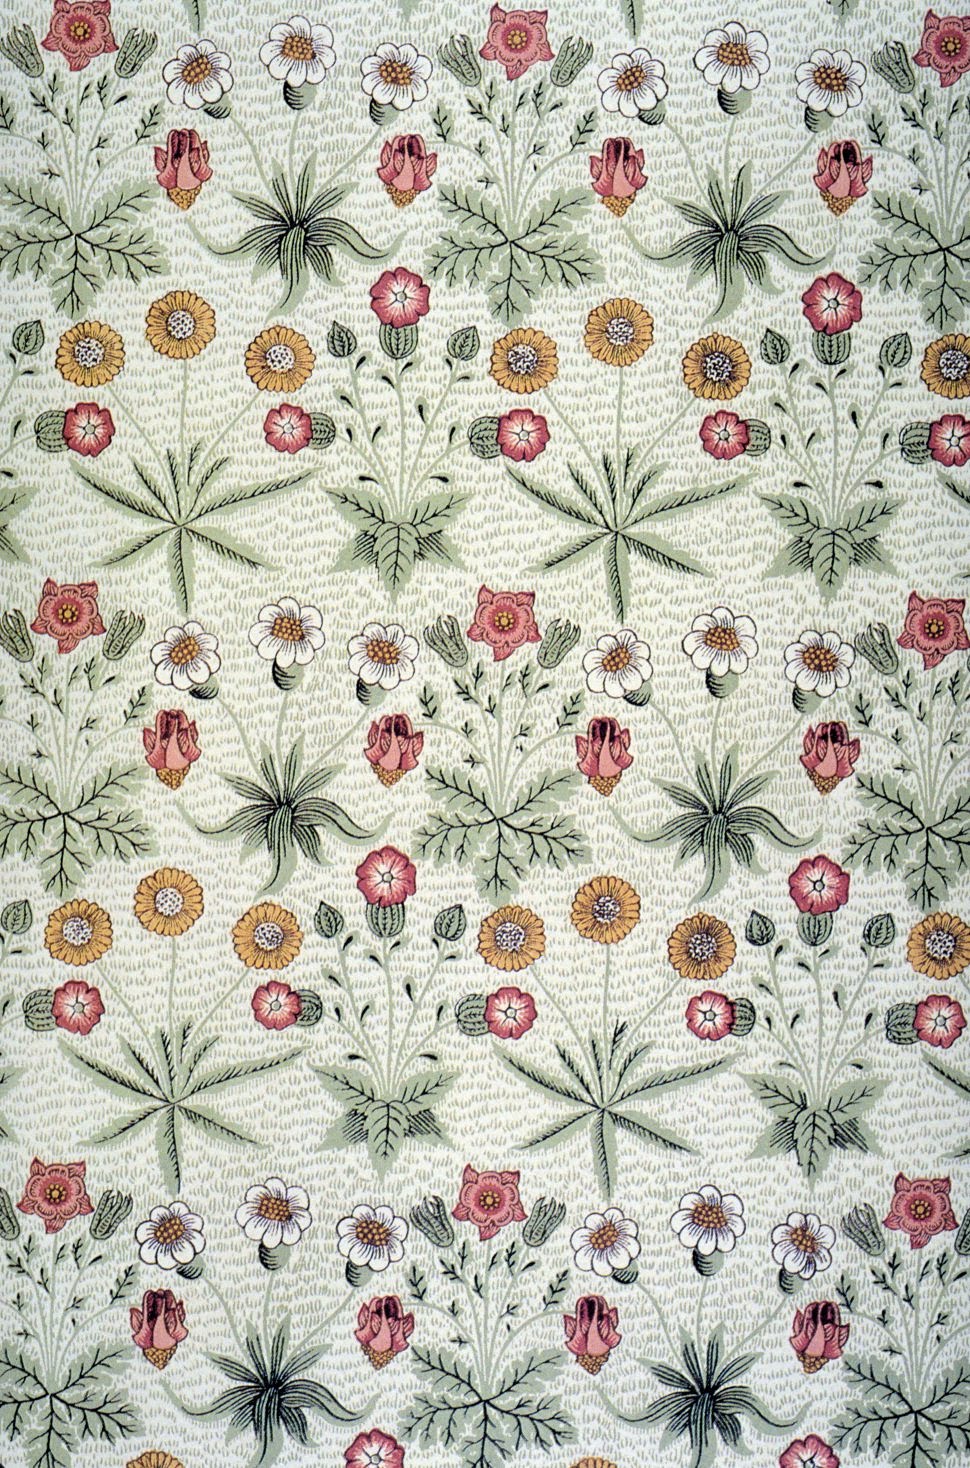 Vintage Ephemera: Daisy wallpaper designed by William Morris, 1864